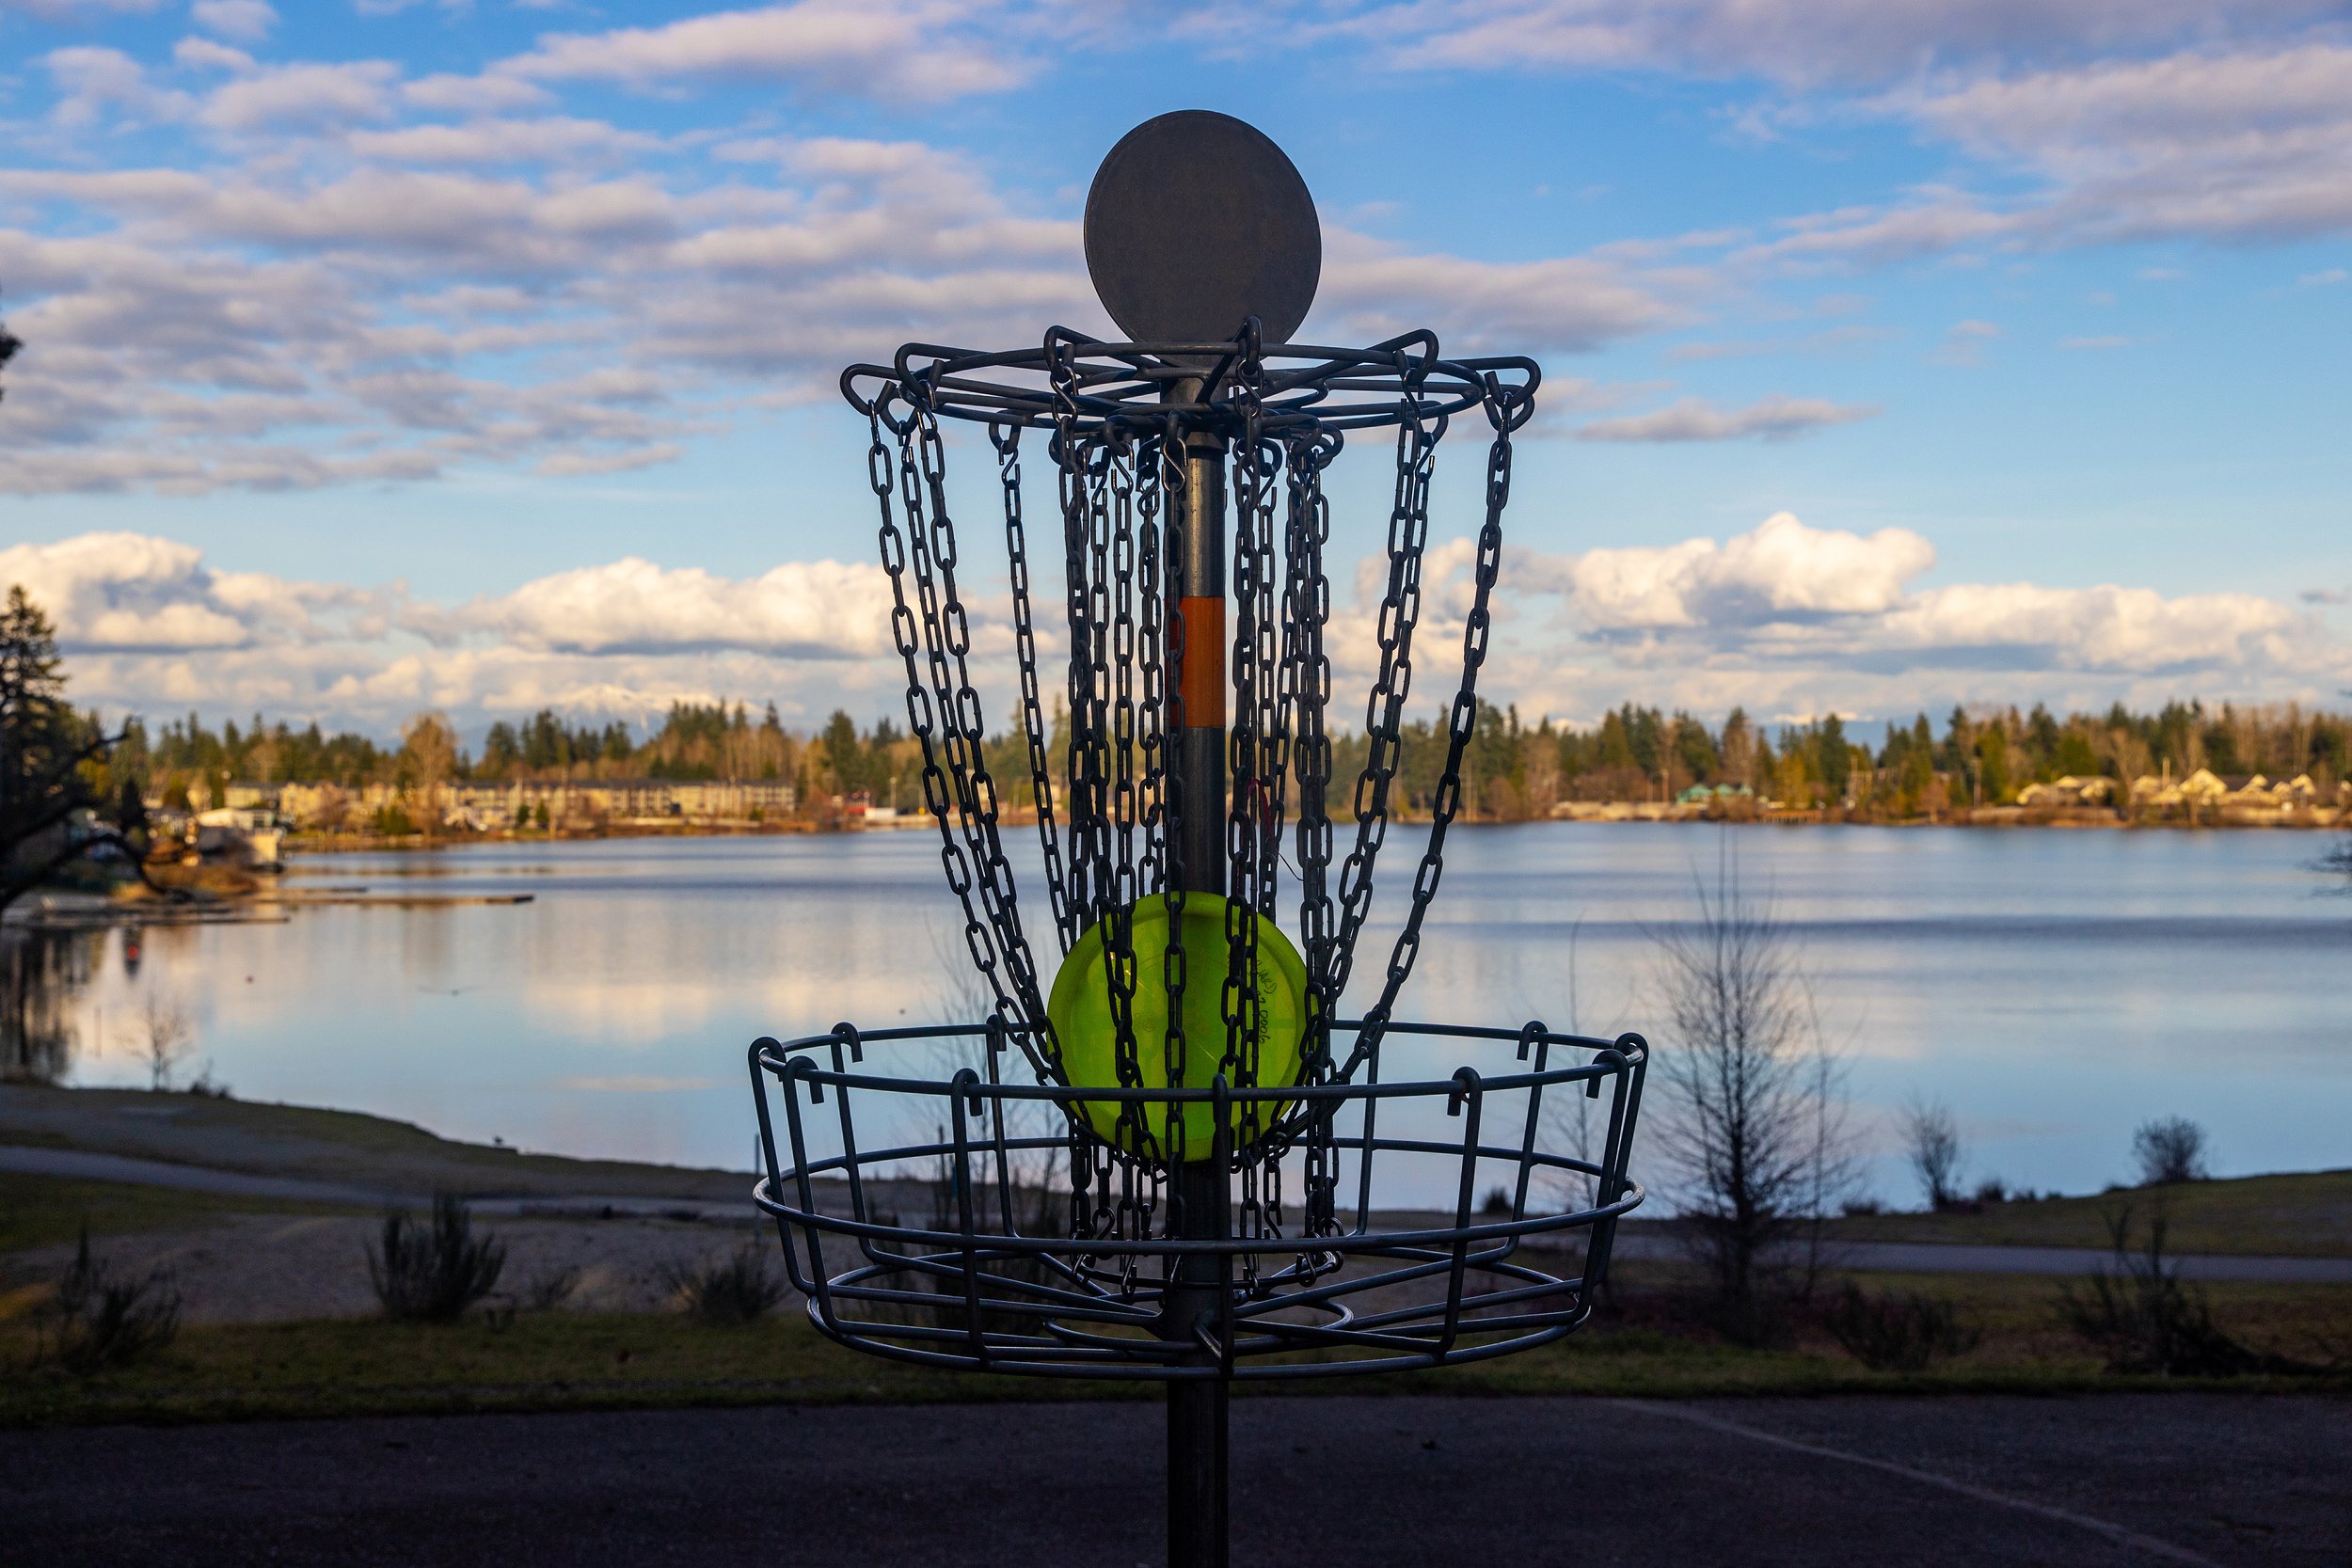 disc-golf-basket-on-pretty-park-course-near-a-lake-2022-06-14-02-06-01-utc.jpg